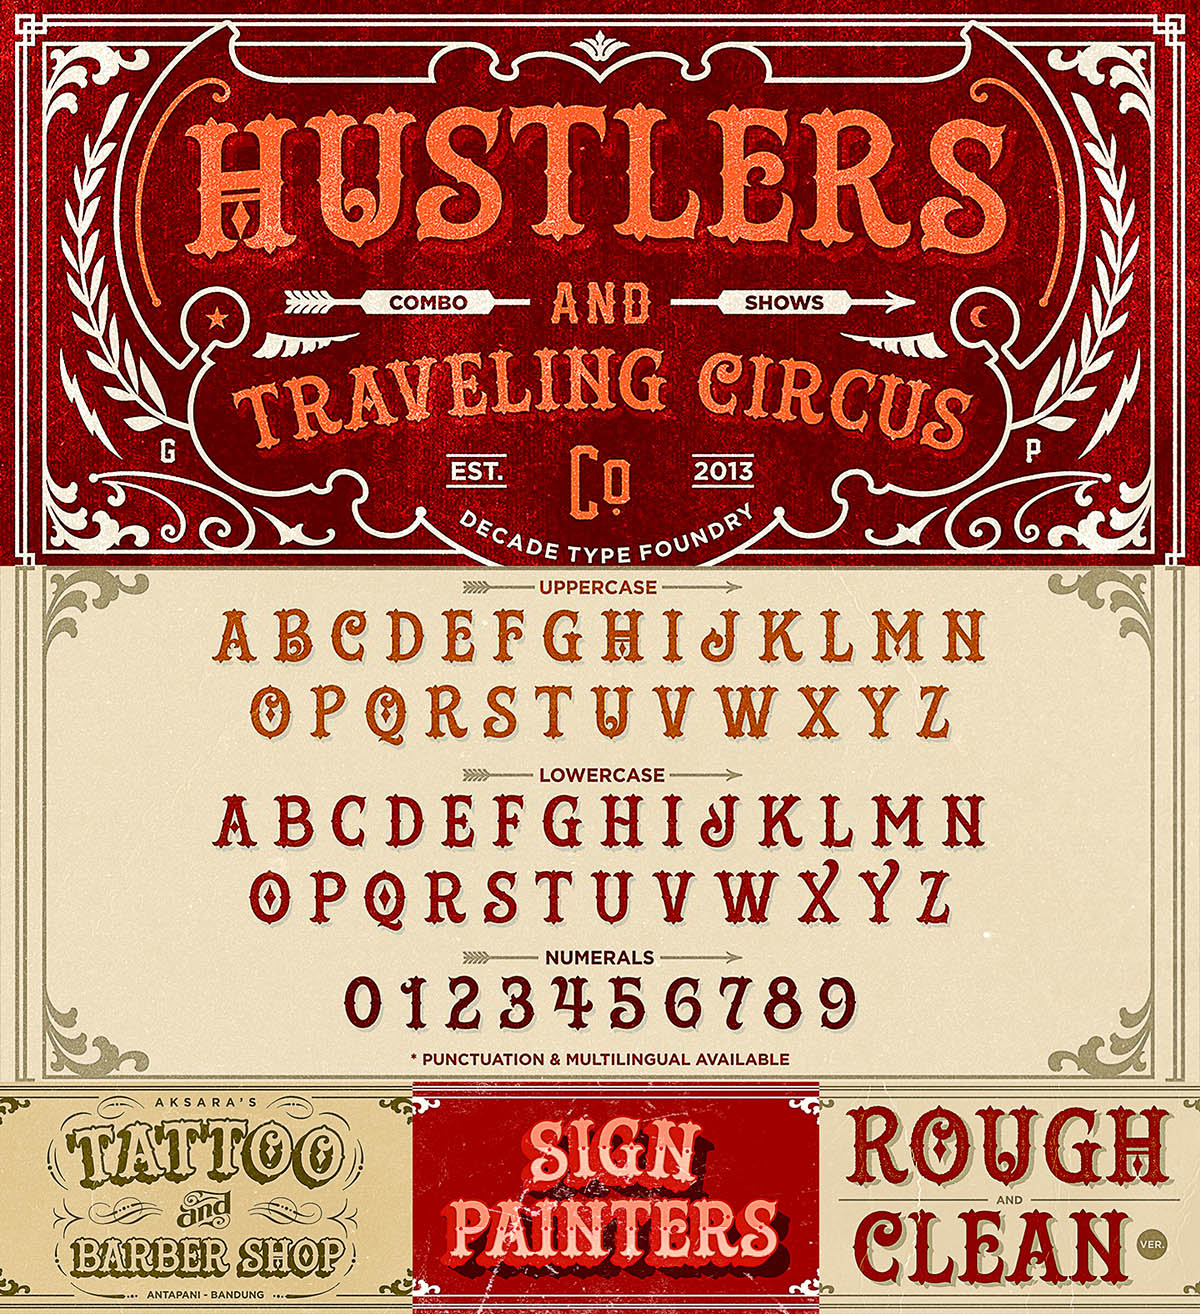 Hustlers font